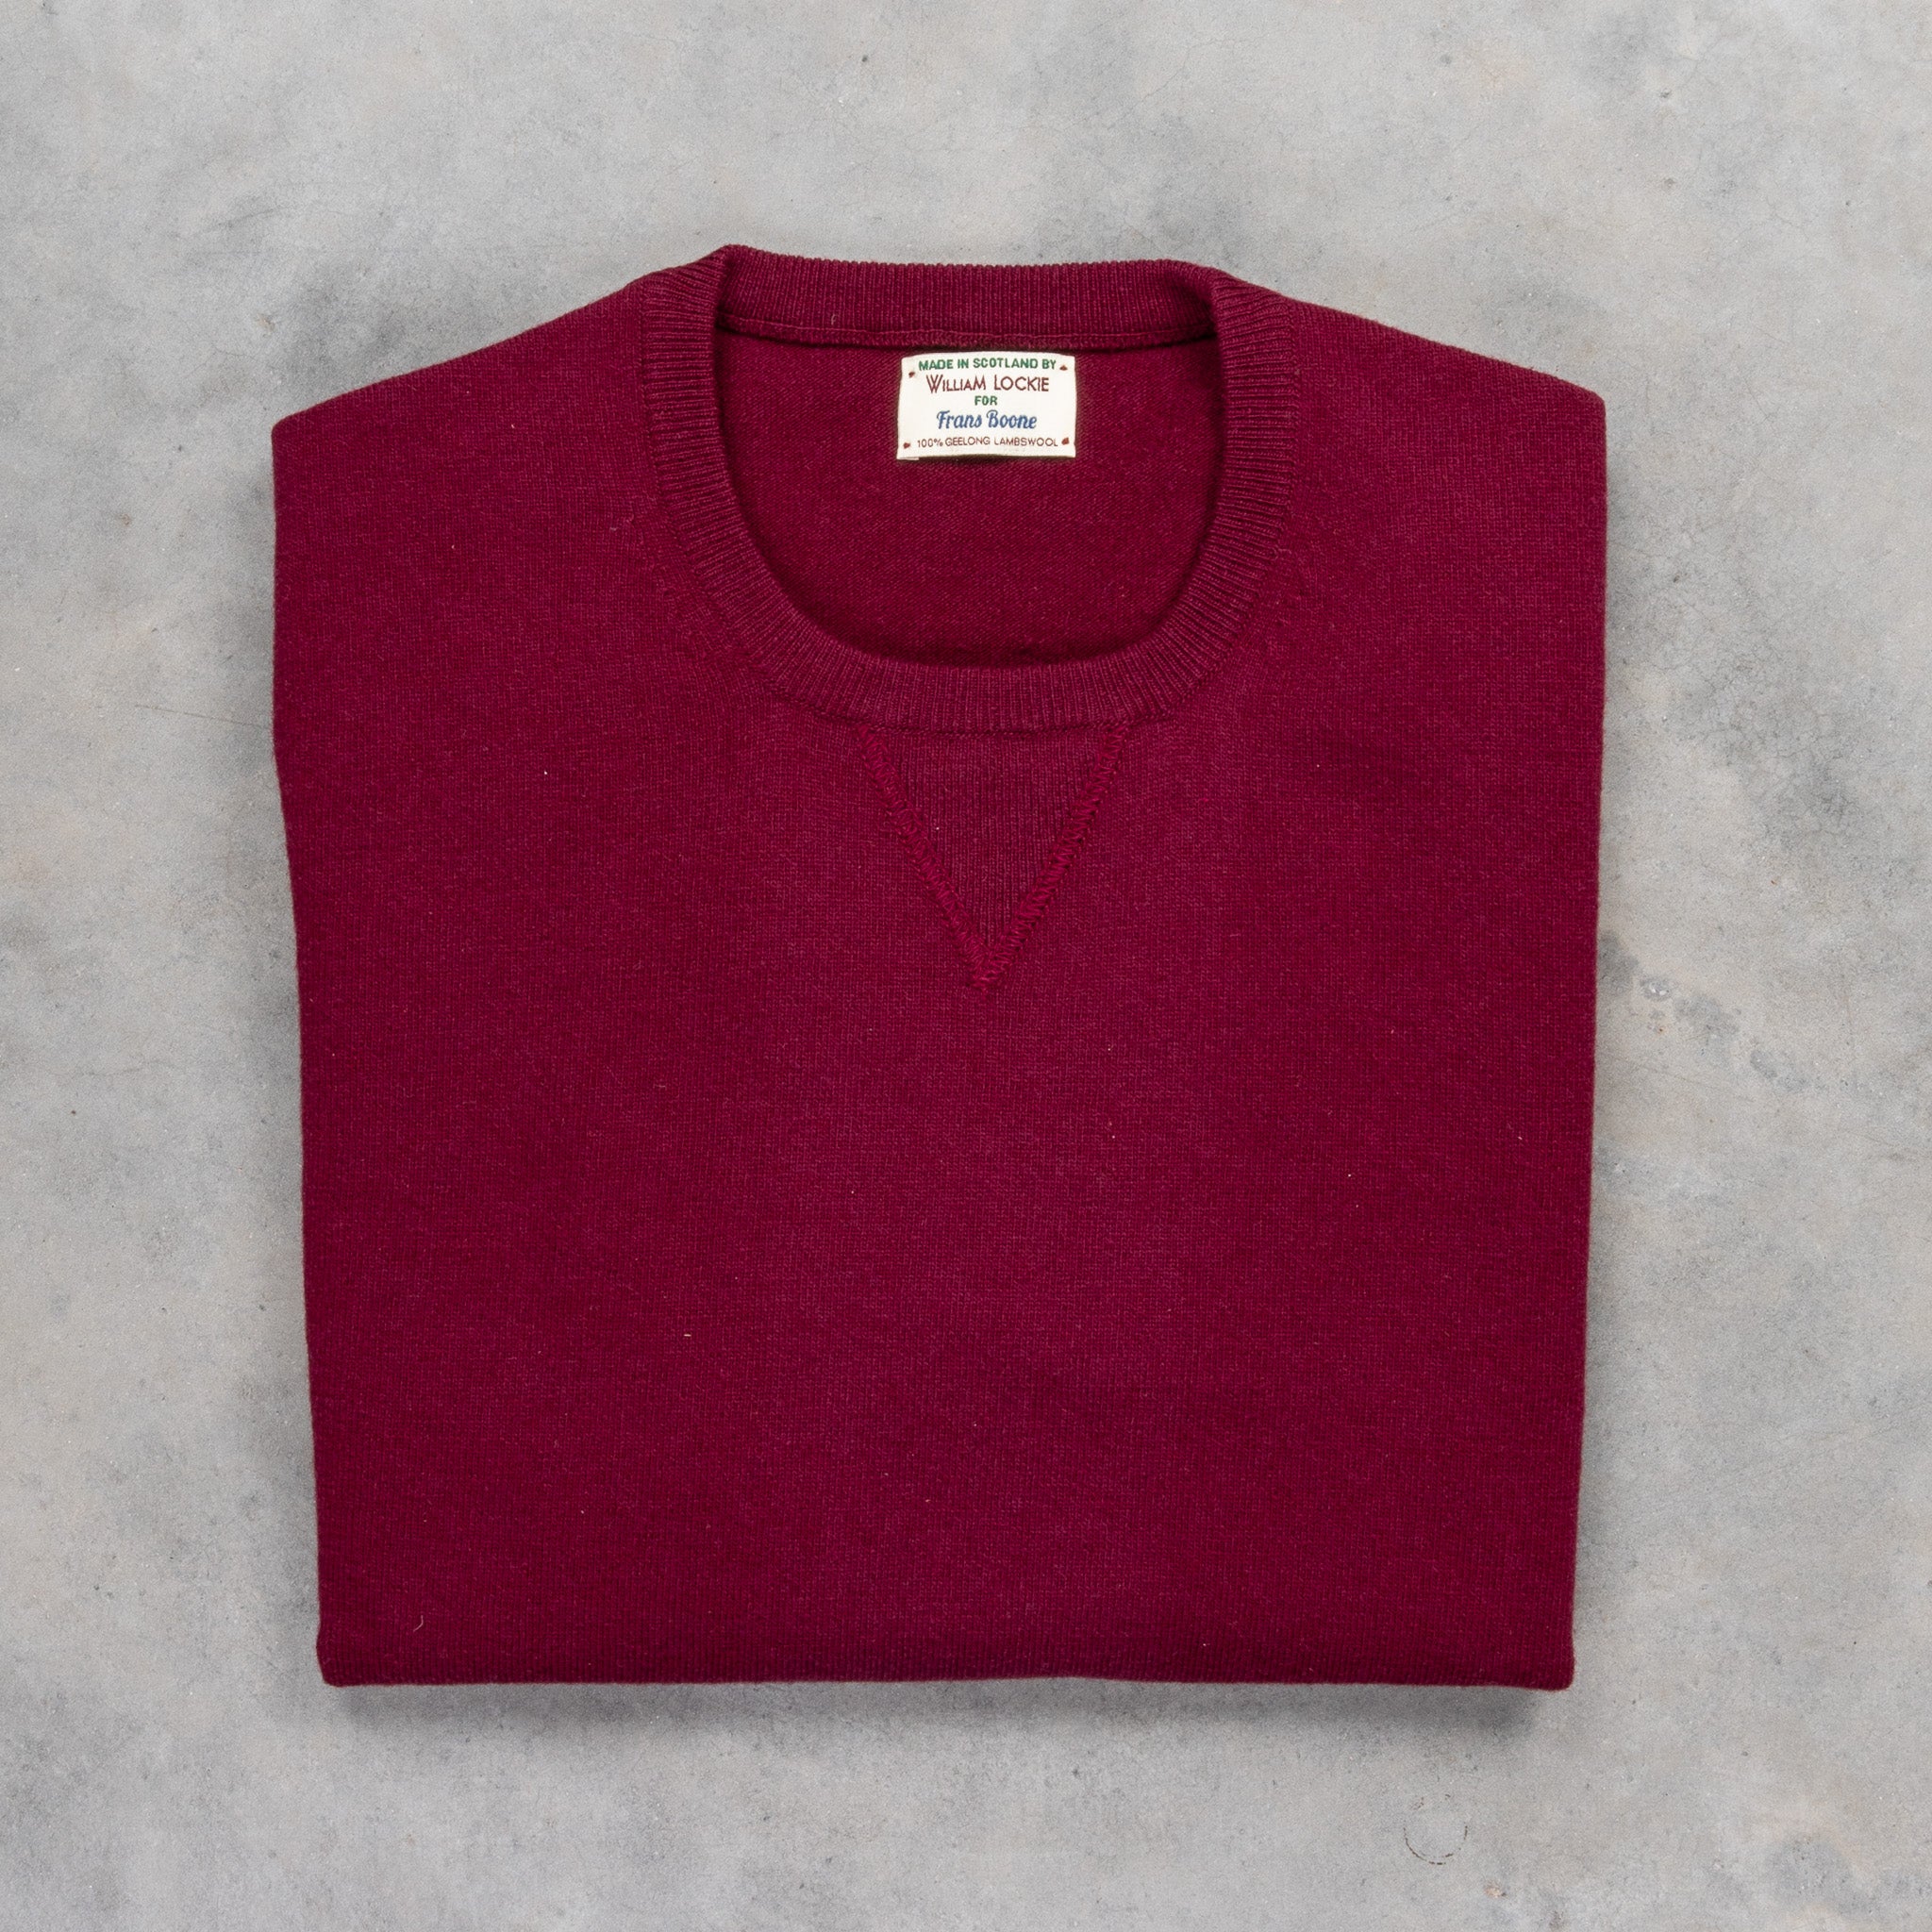 William Lockie x Frans Boone Super Geelong Vintage fit sweater damson